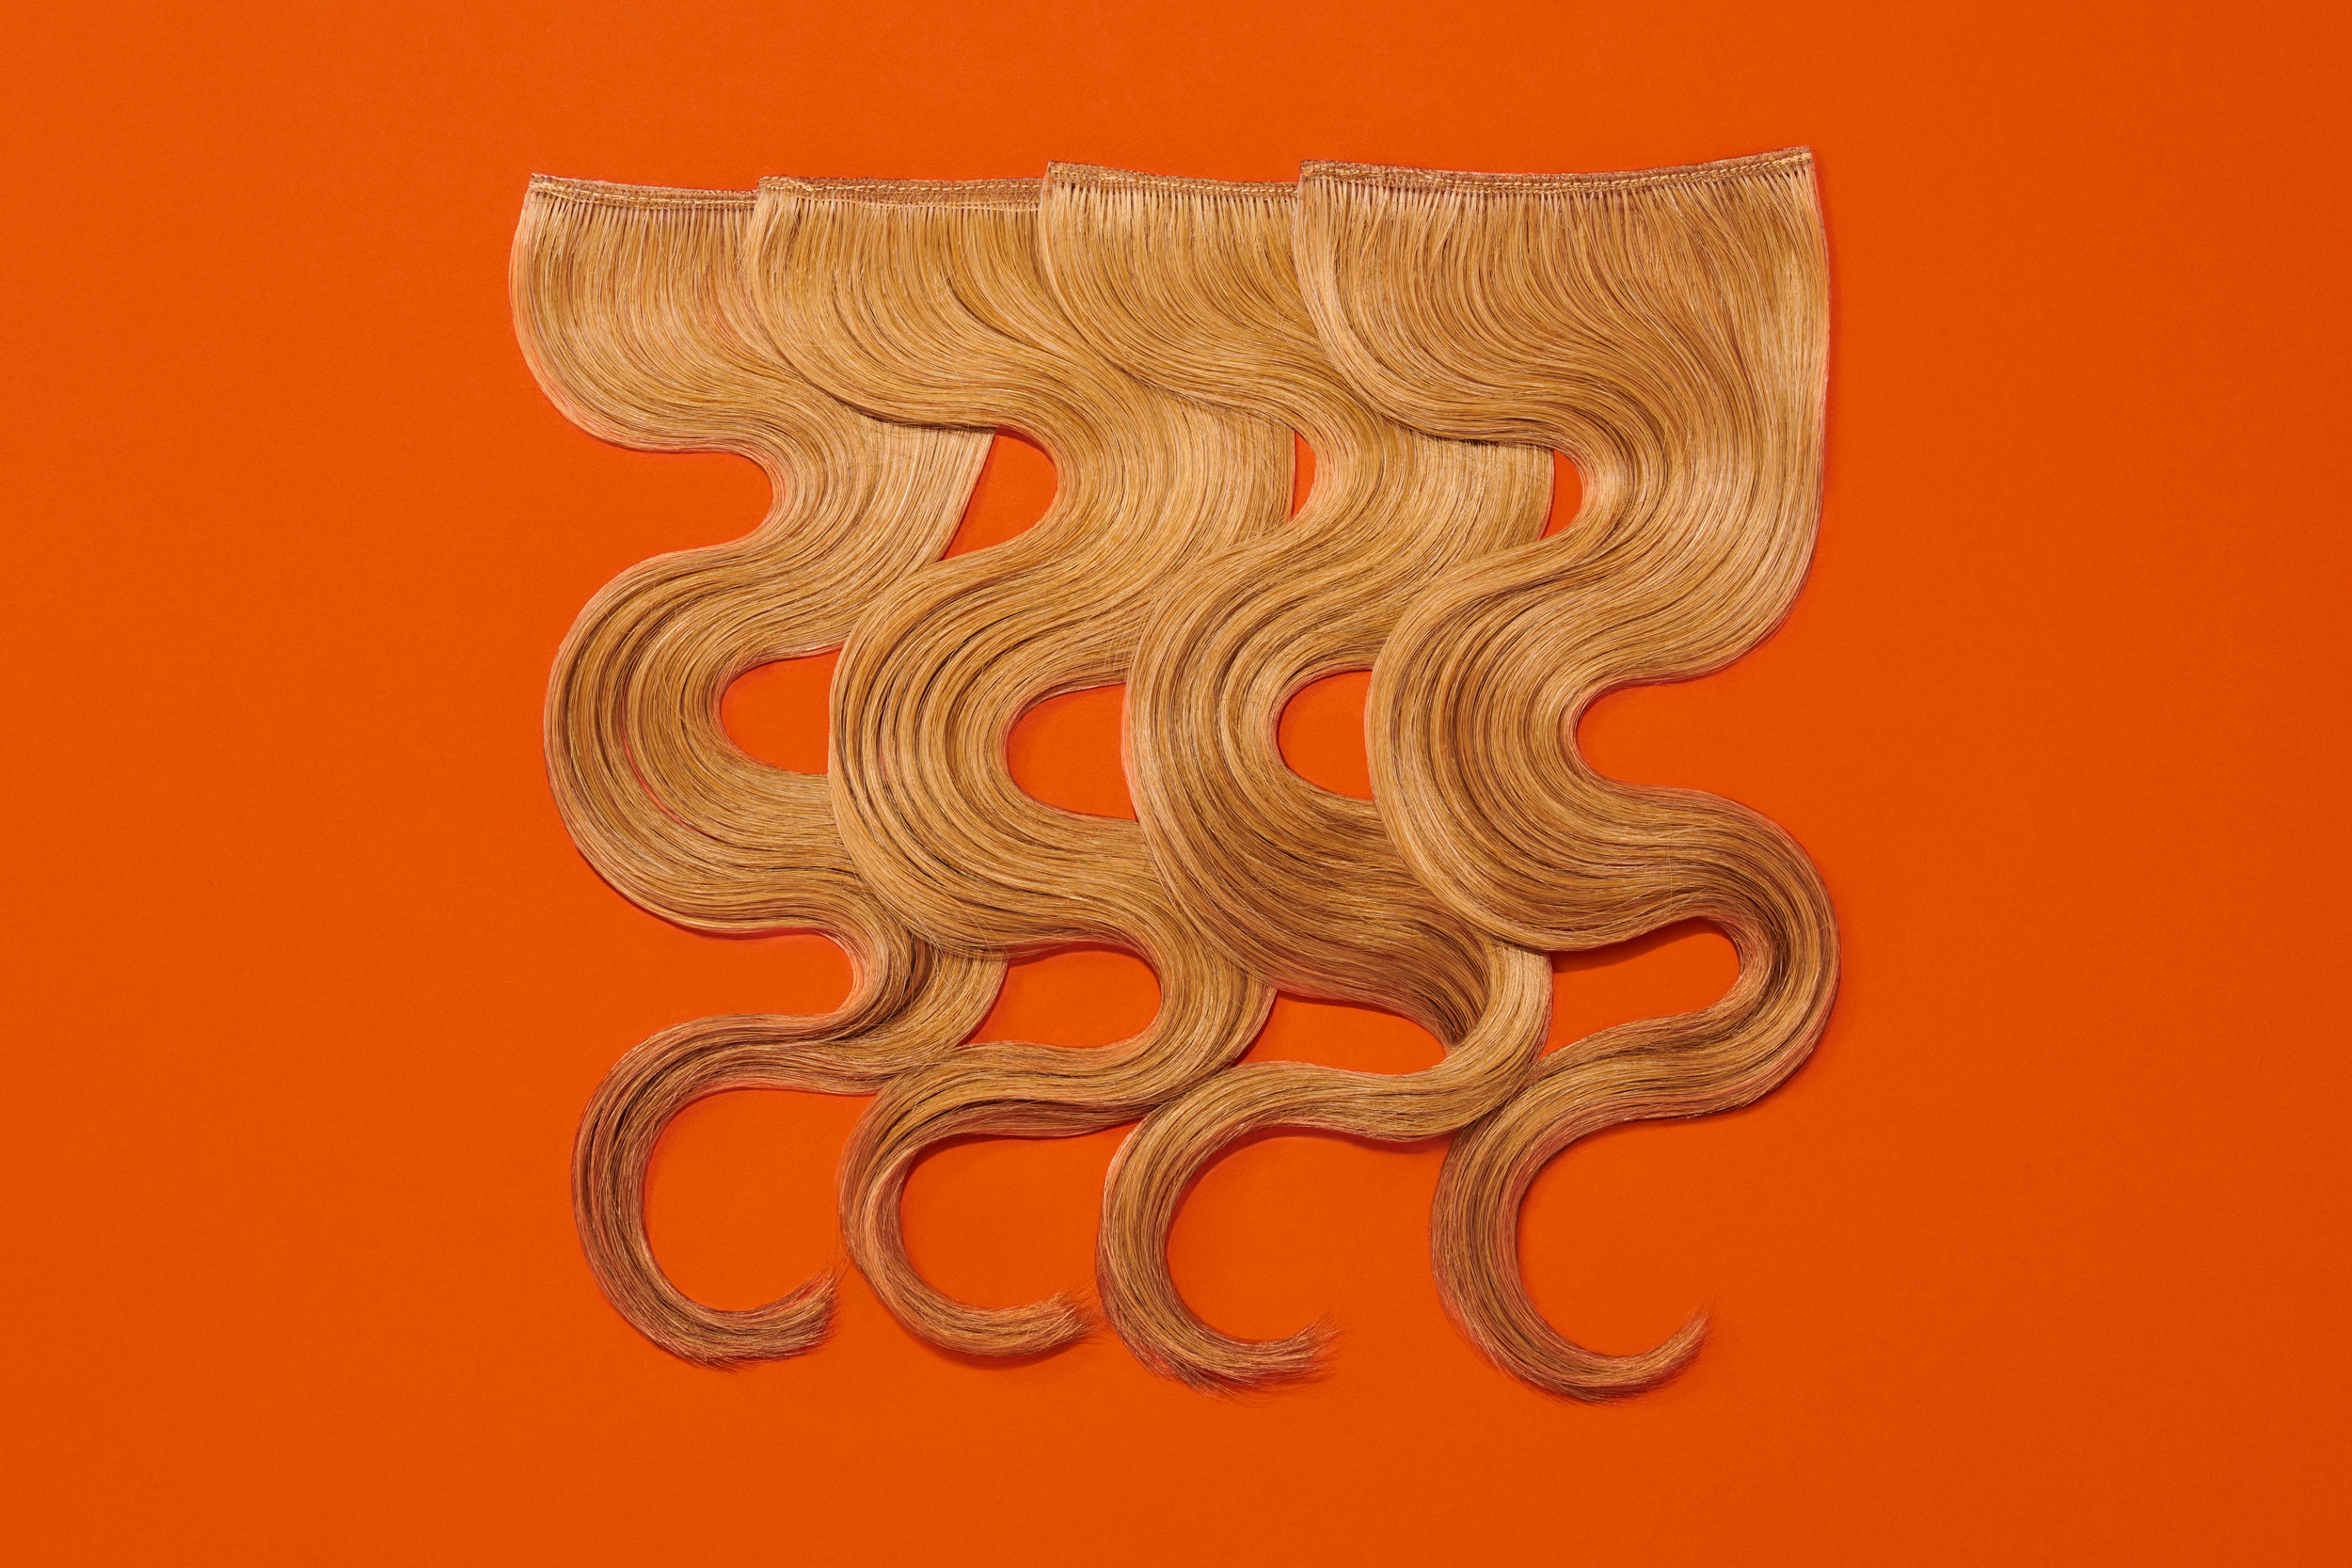 Caramel brown balayage-style hair extension wefts on orange background